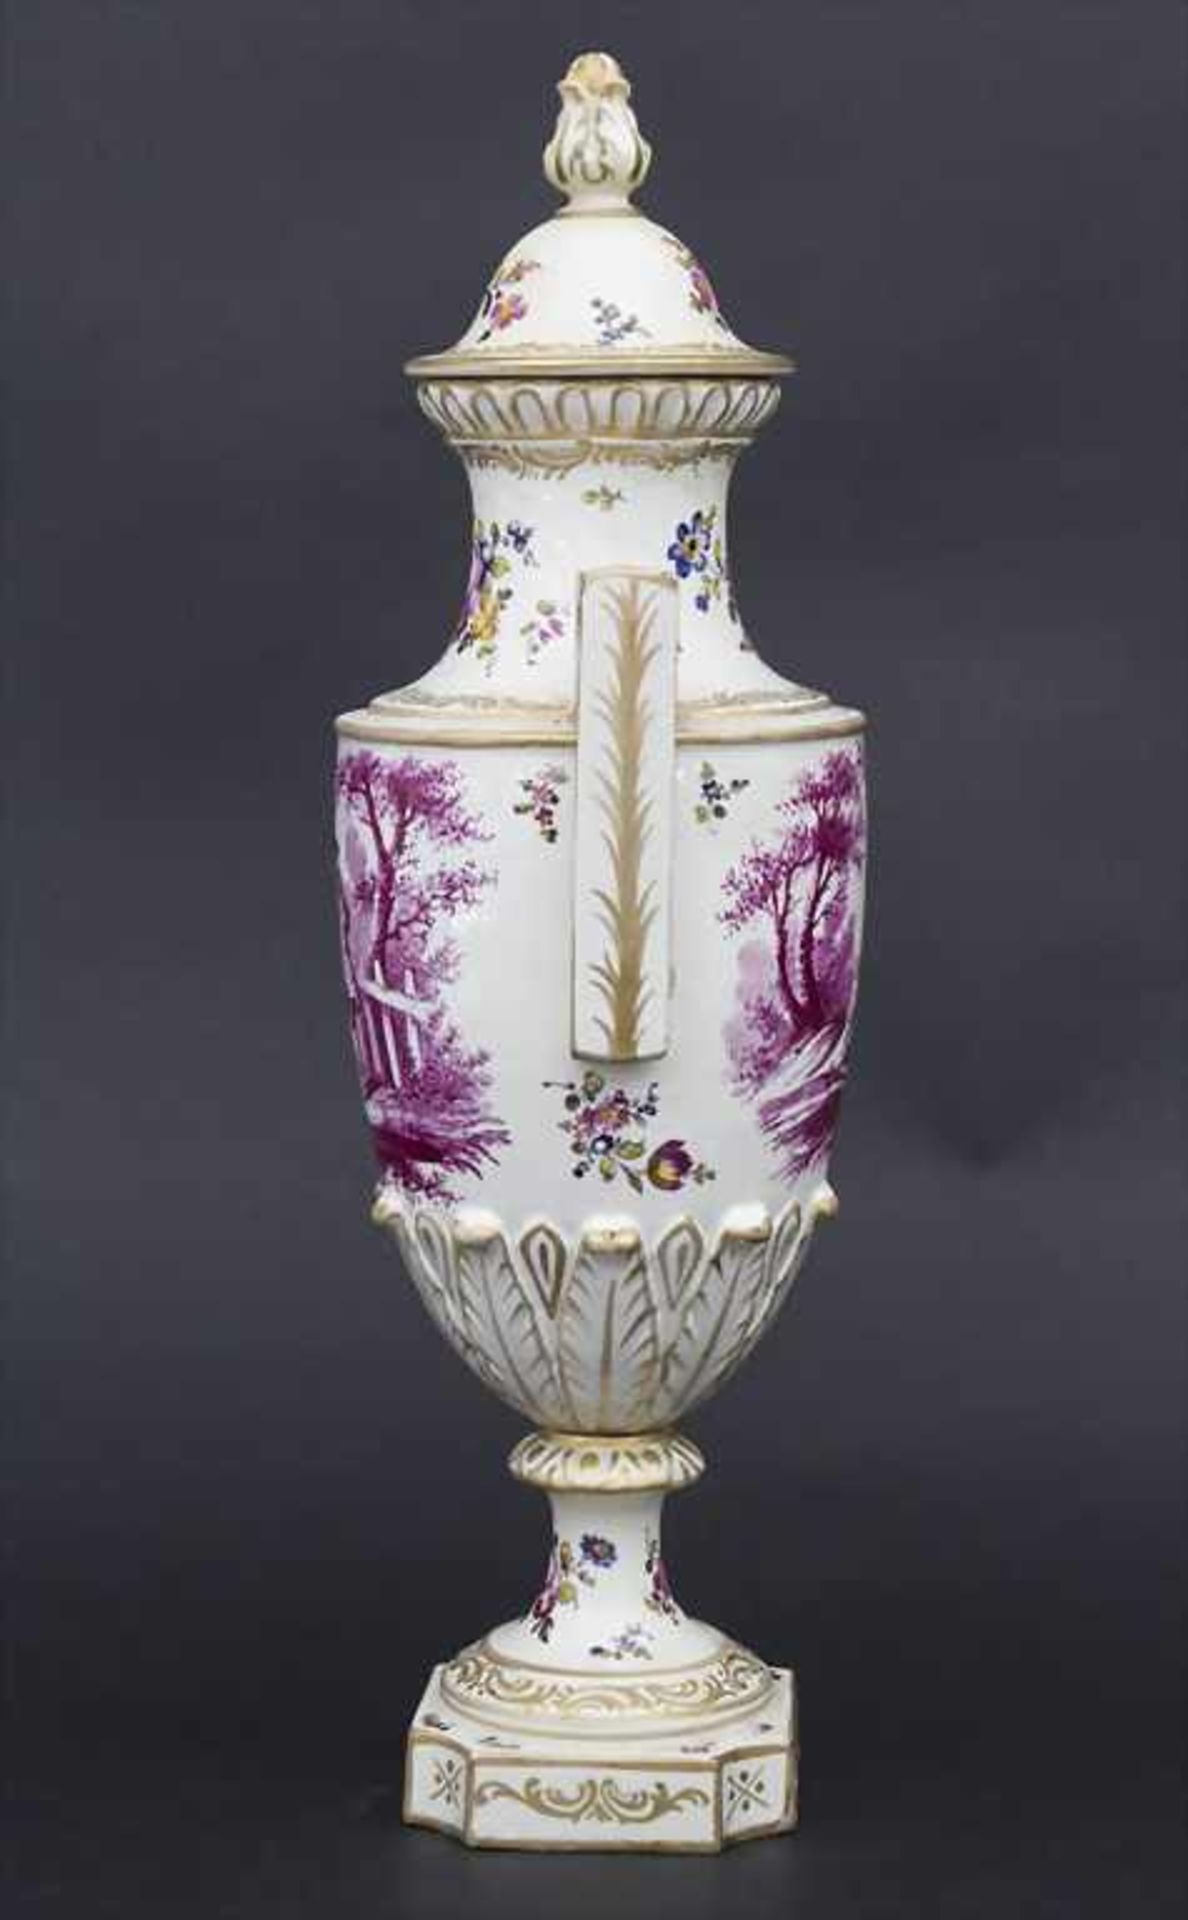 Große Deckelvase mit Purpurmalerei / A large lidded vase with Camaieu painting, wohl 19. Jh. - Bild 5 aus 11